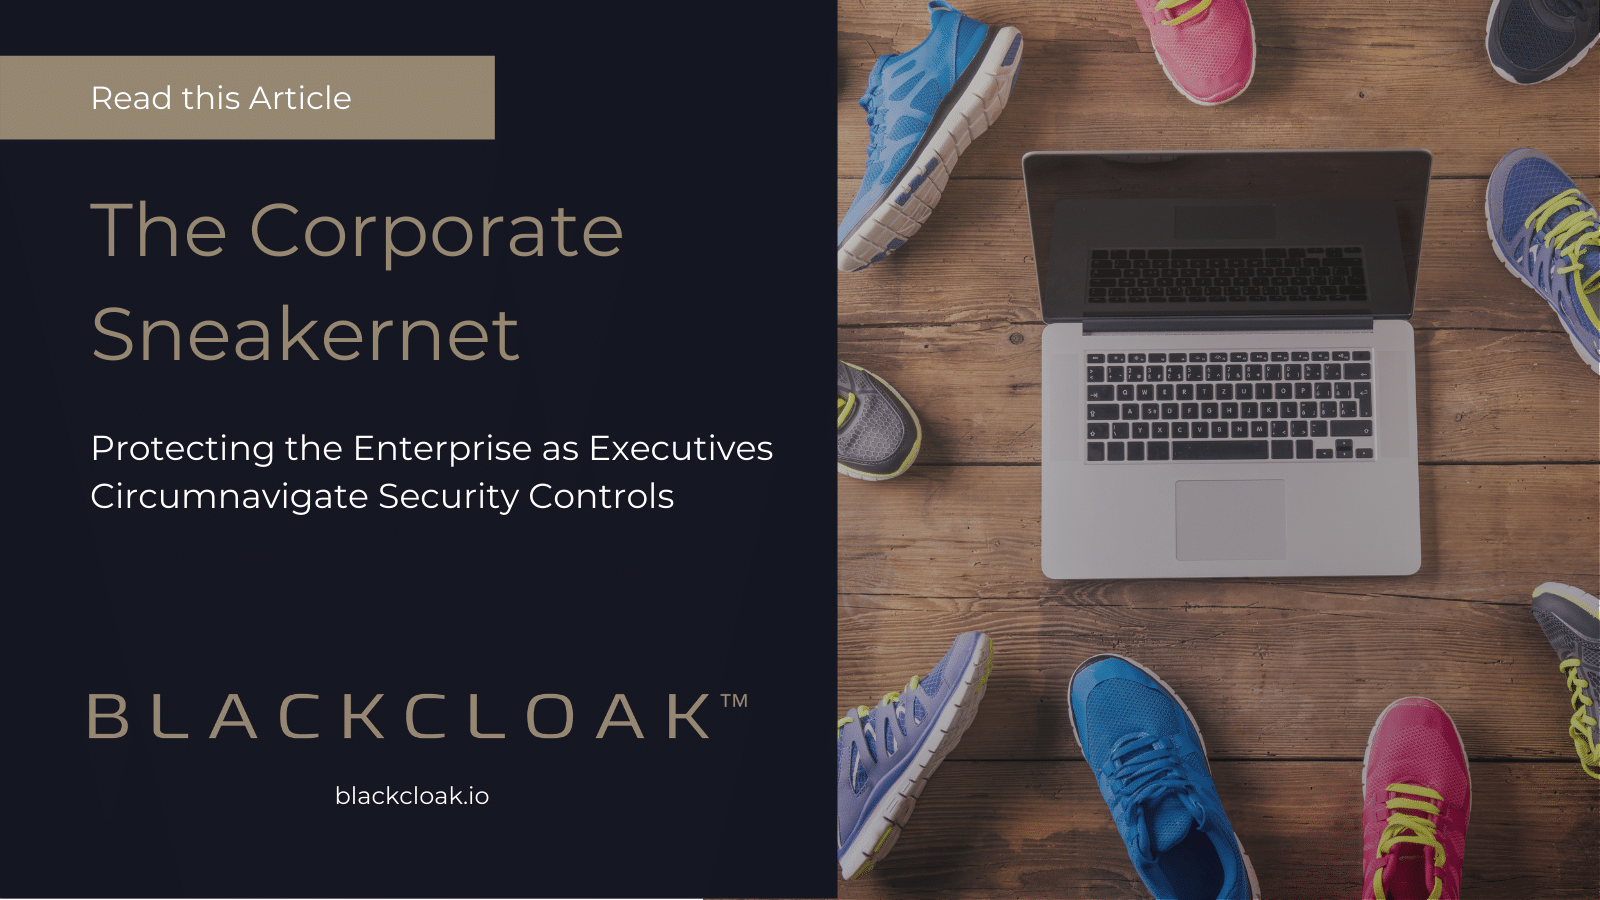 BlackCloak Corporate Sneakernet Blog Image